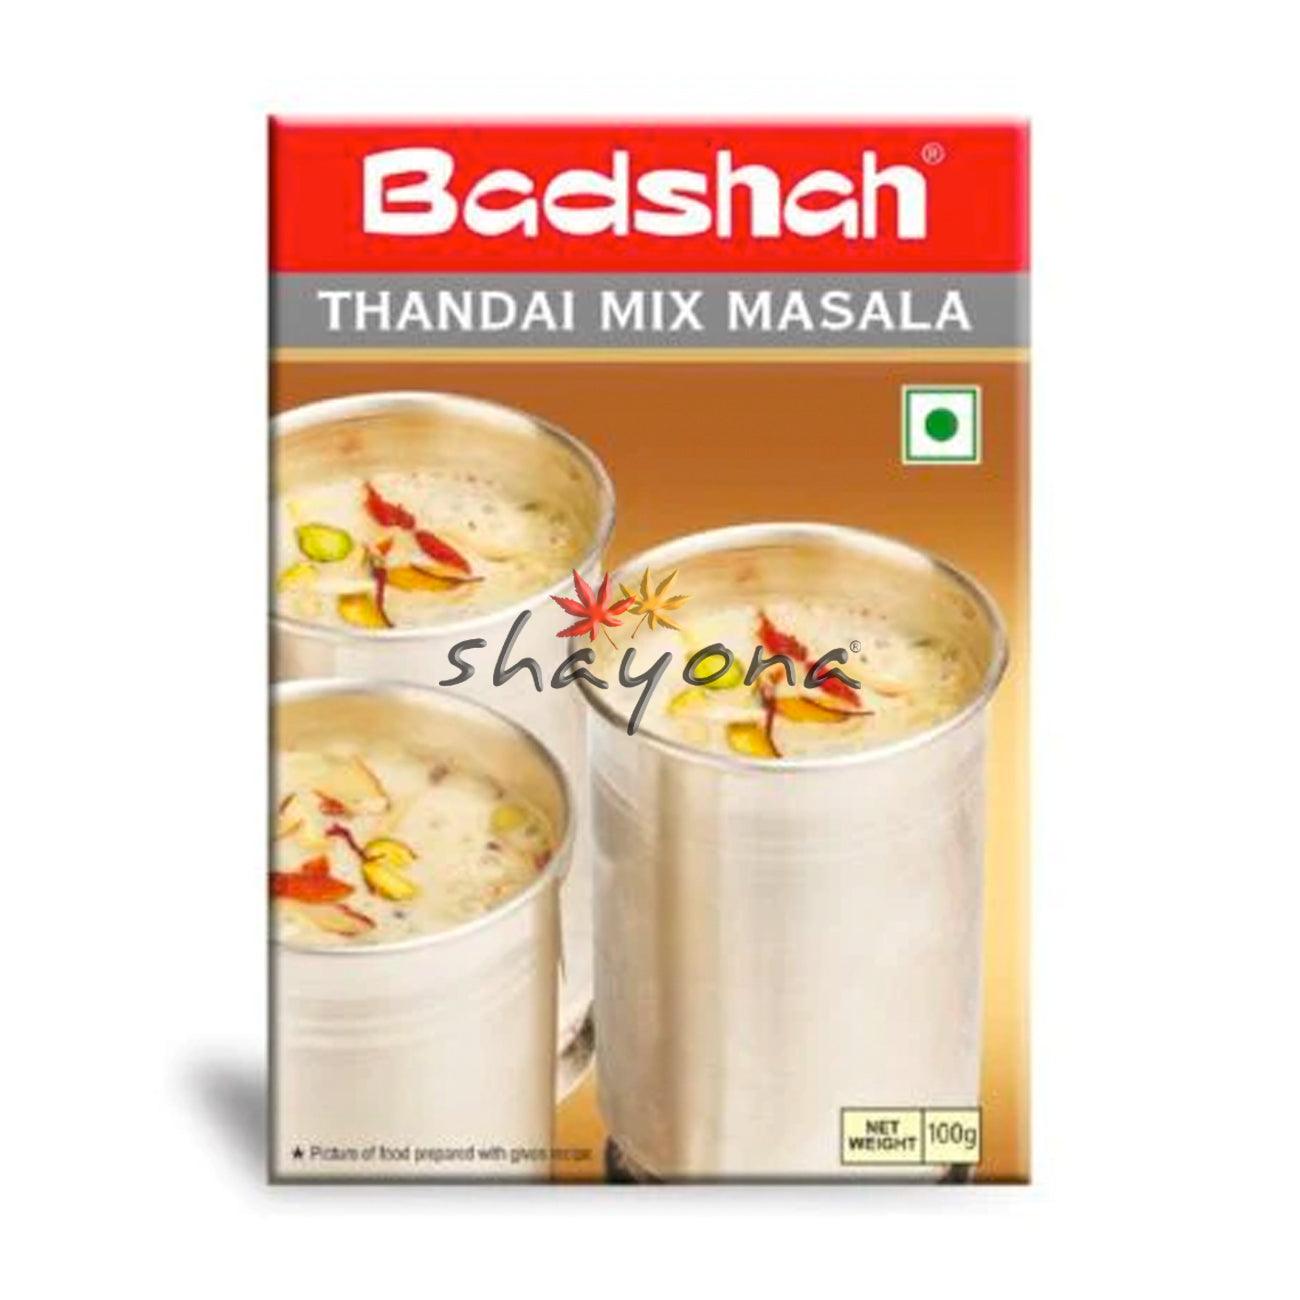 Badshah Thandai Mix Masala - Shayona UK